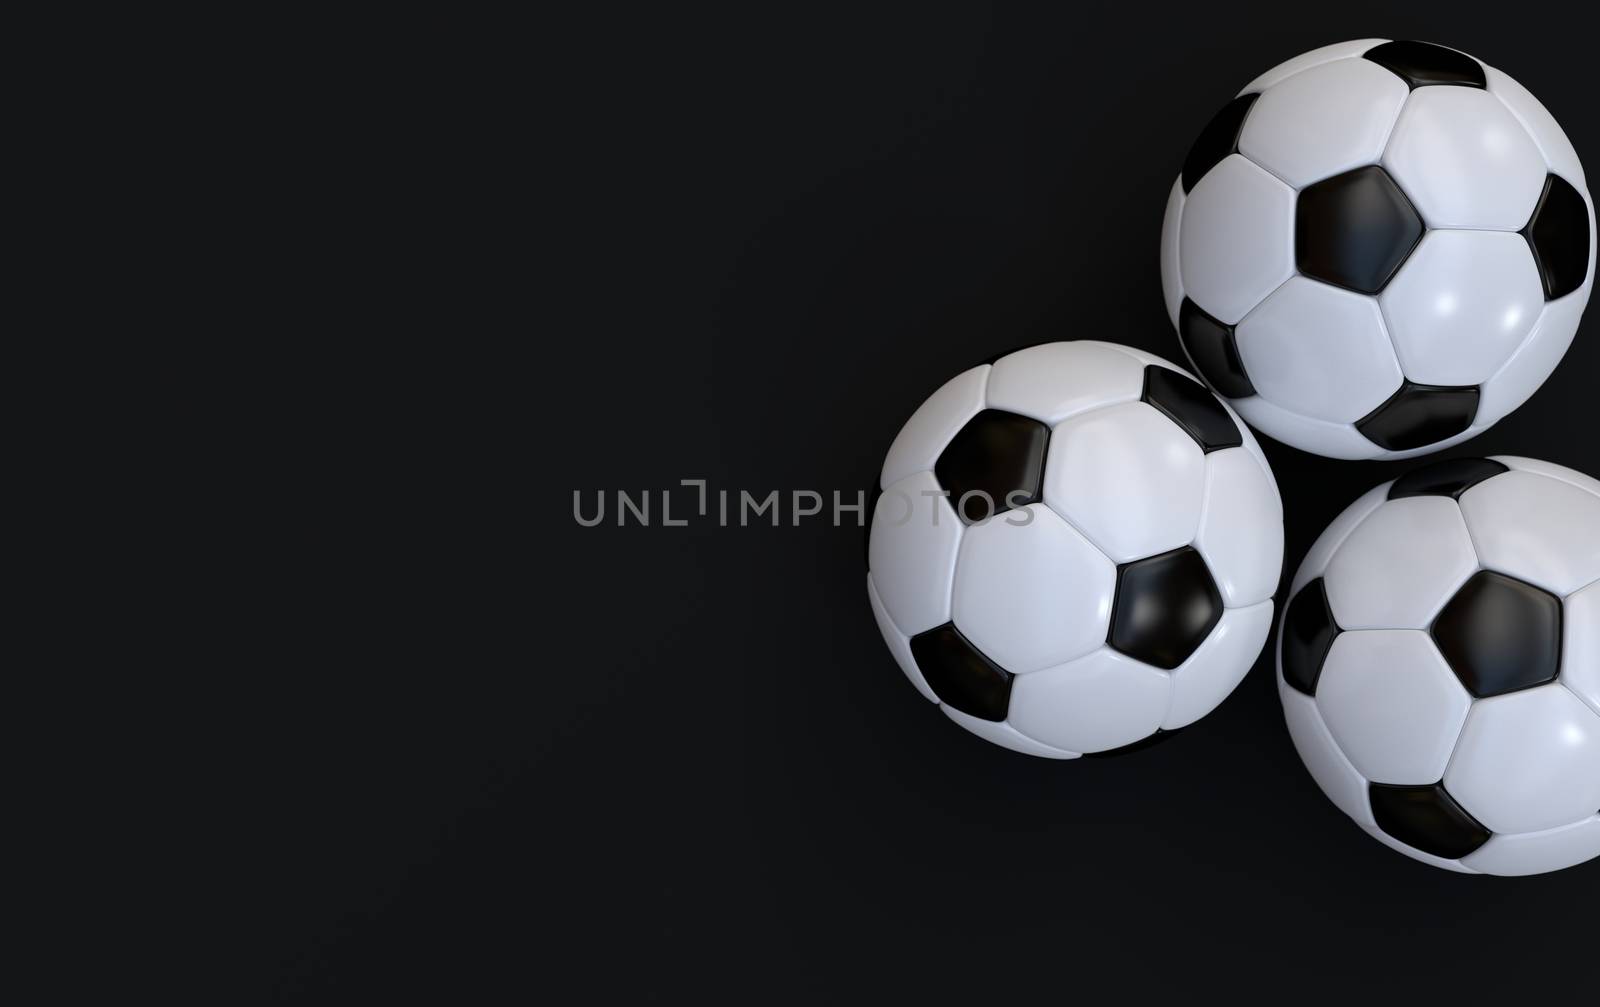 Championship soccer, football balls on black background